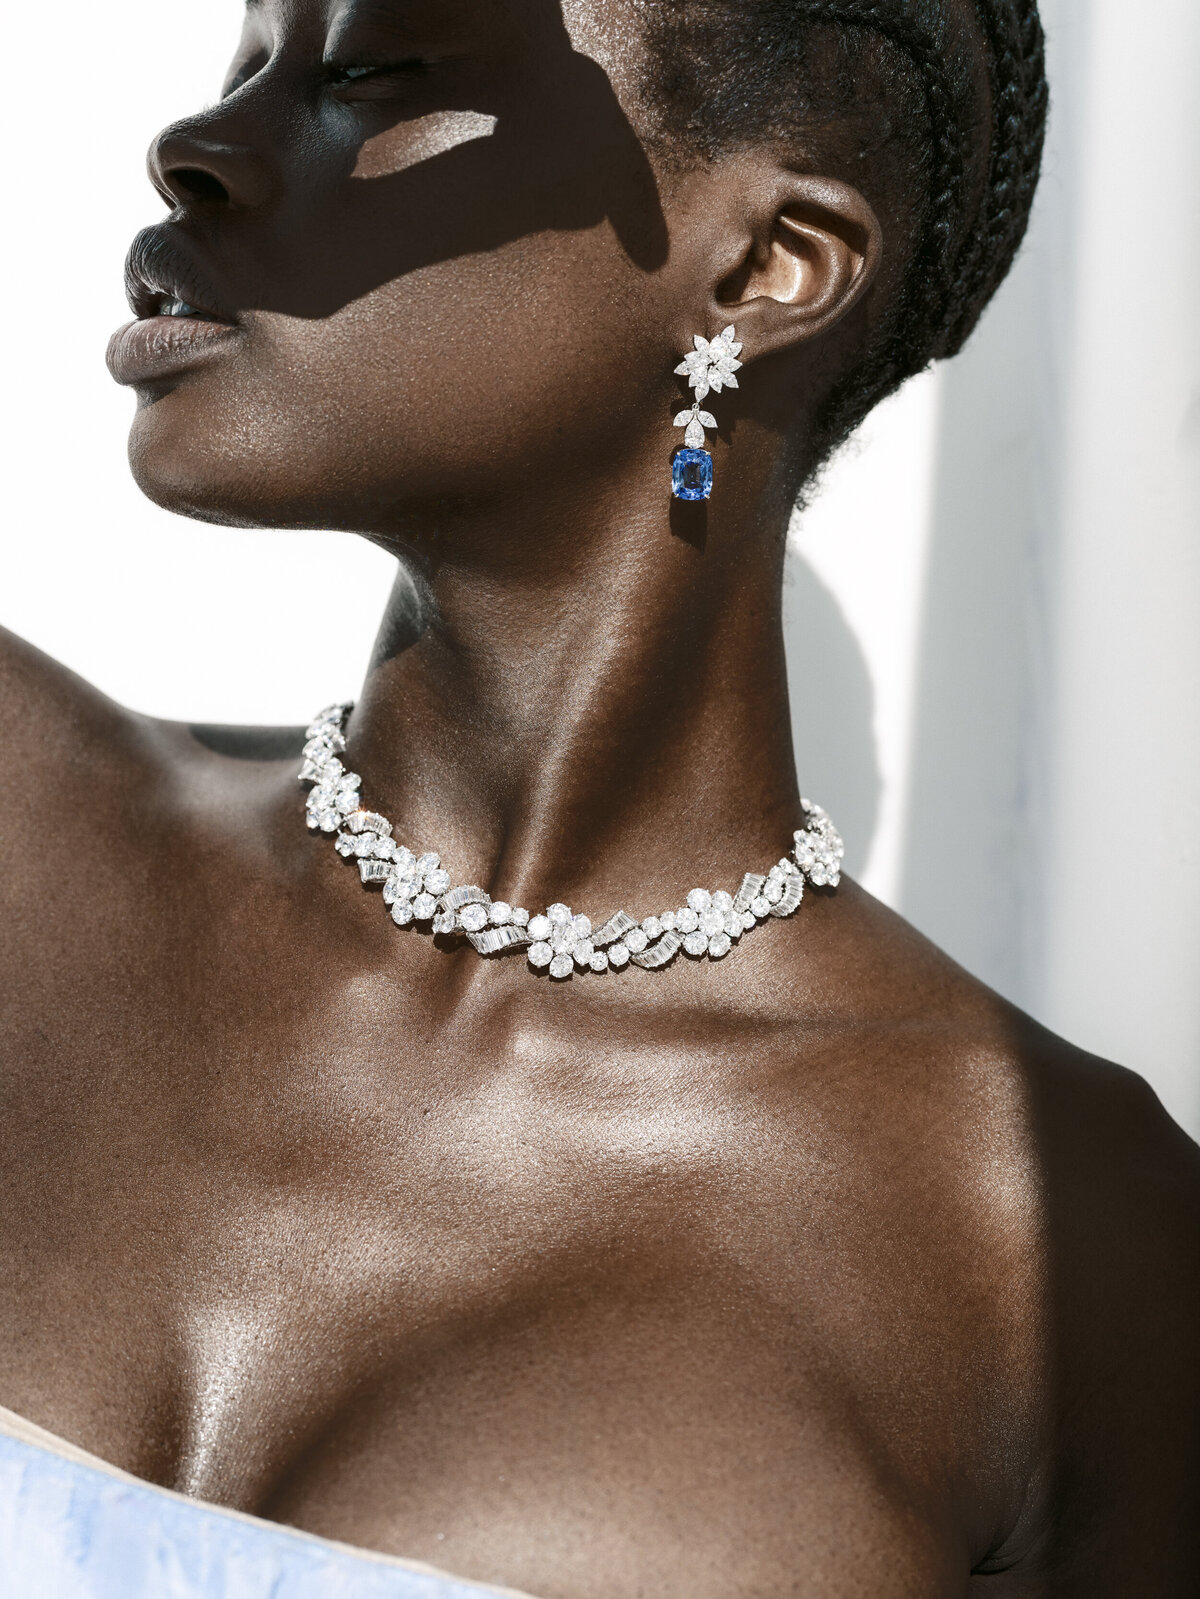 32-KT-Merry-fashion-photography-vivid-diamnonds-necklace